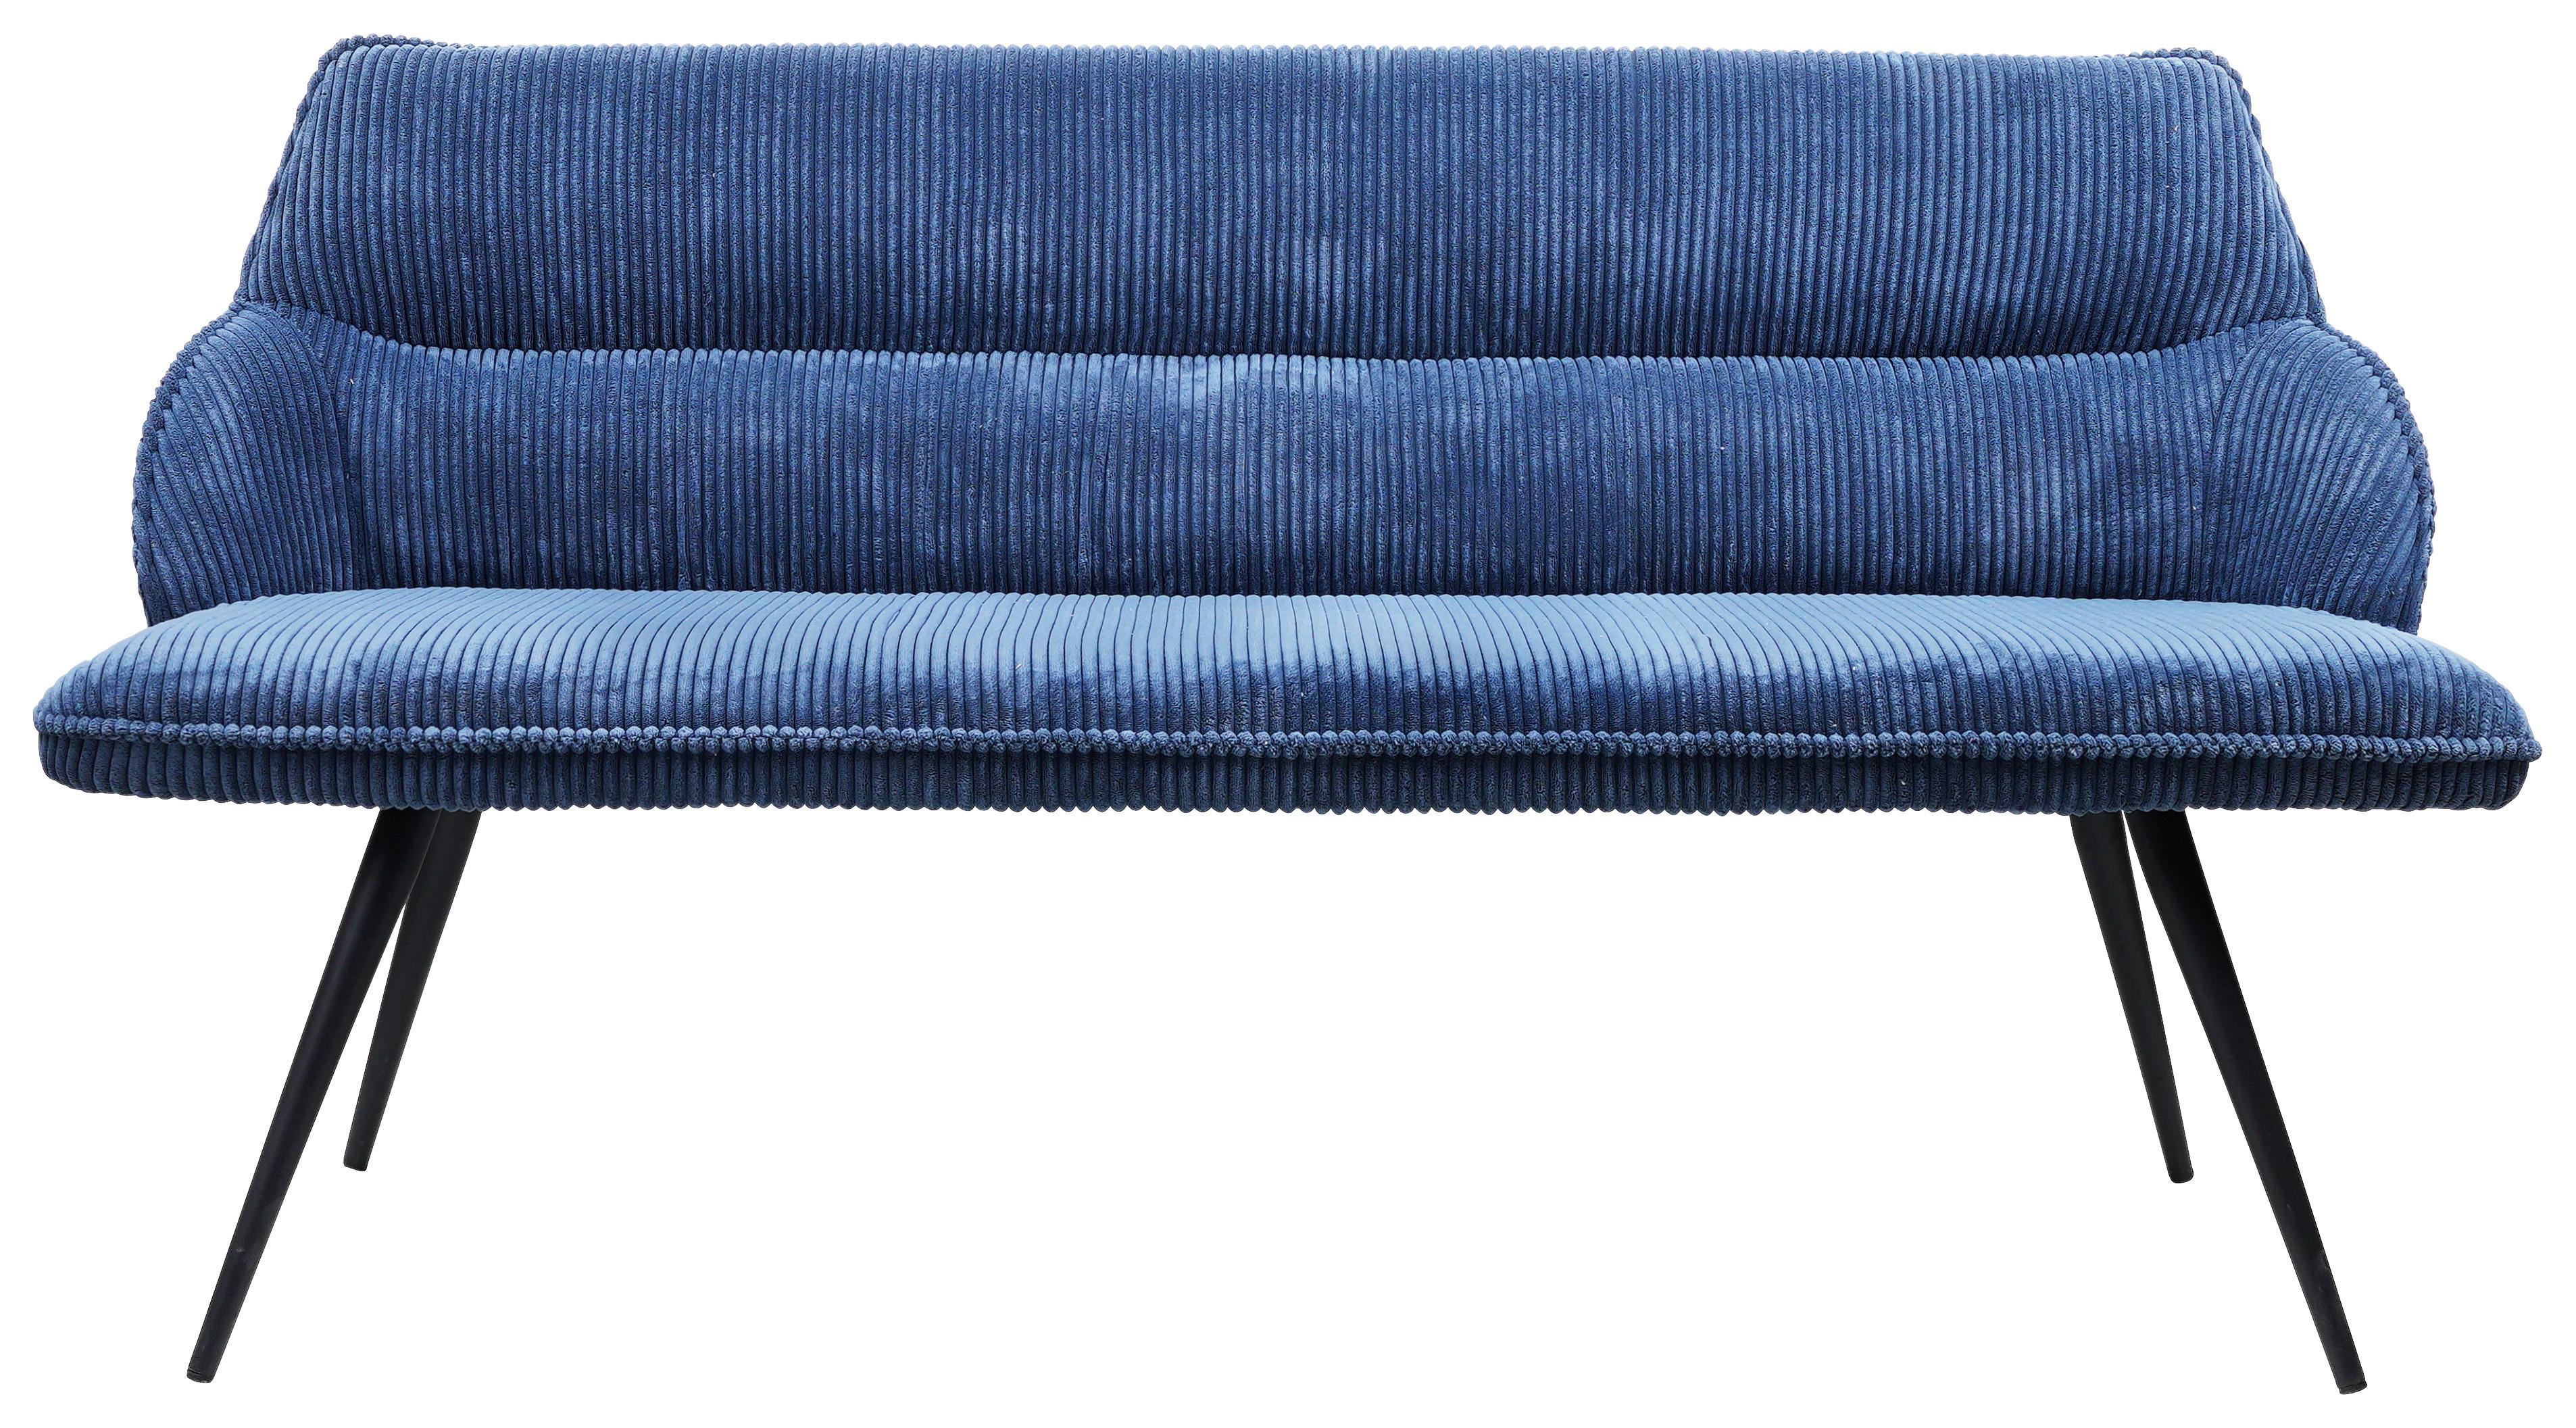 Klop Bursa, Modra - modra/črna, Moderno, kovina/tekstil (163/67/85cm) - Modern Living